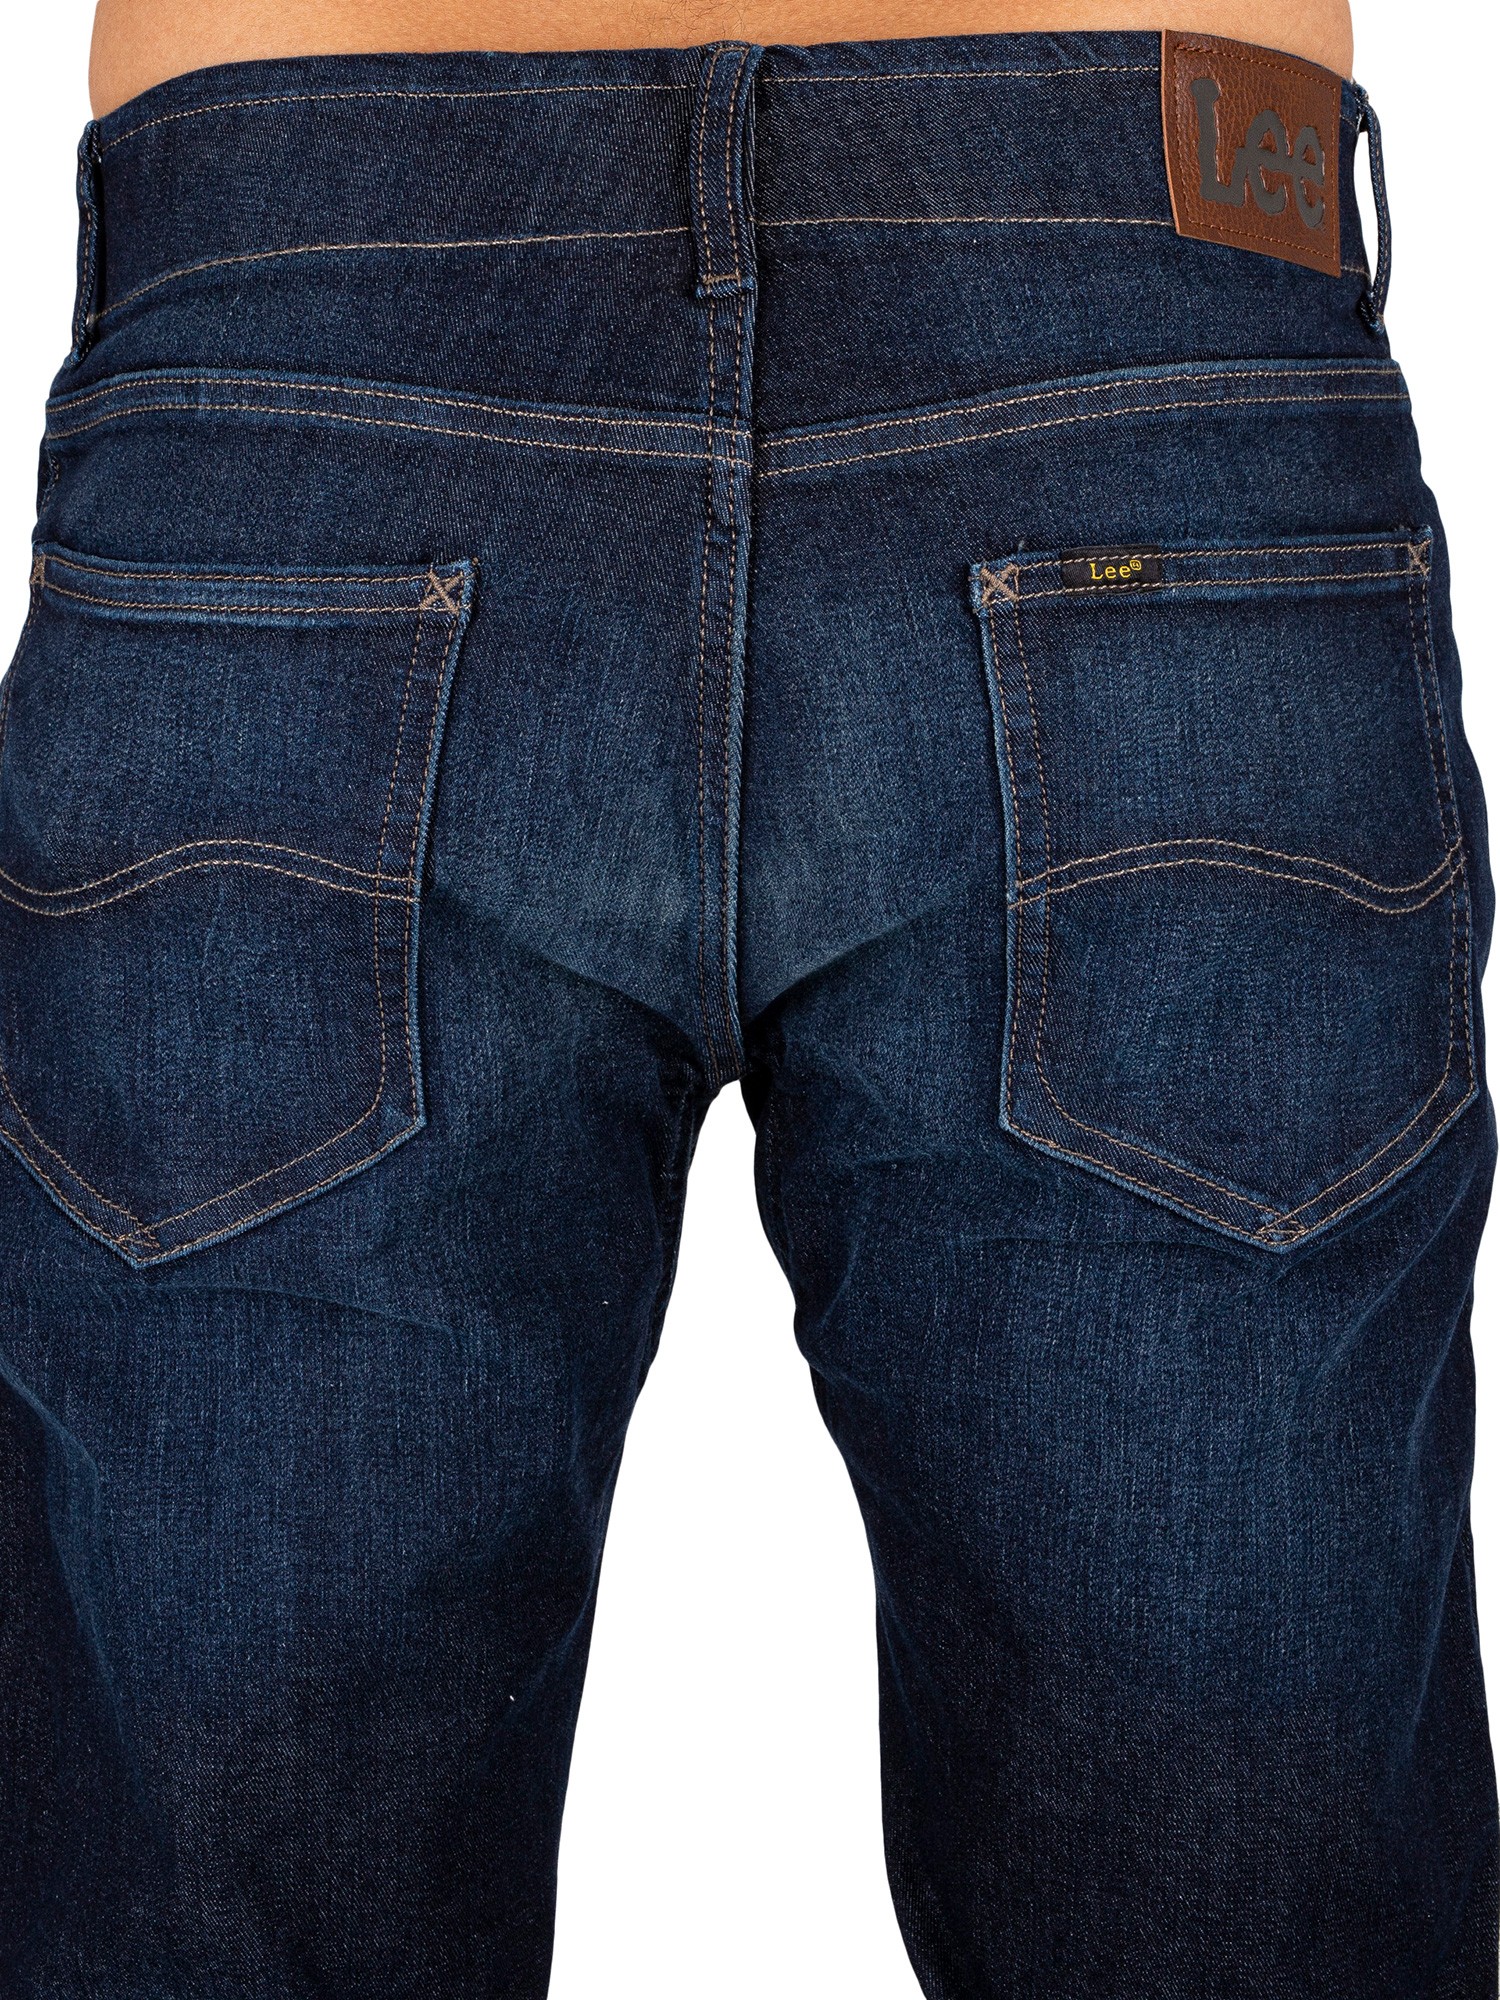 Lee Straight Fit XM Trip Jeans - Dark Denim | Standout